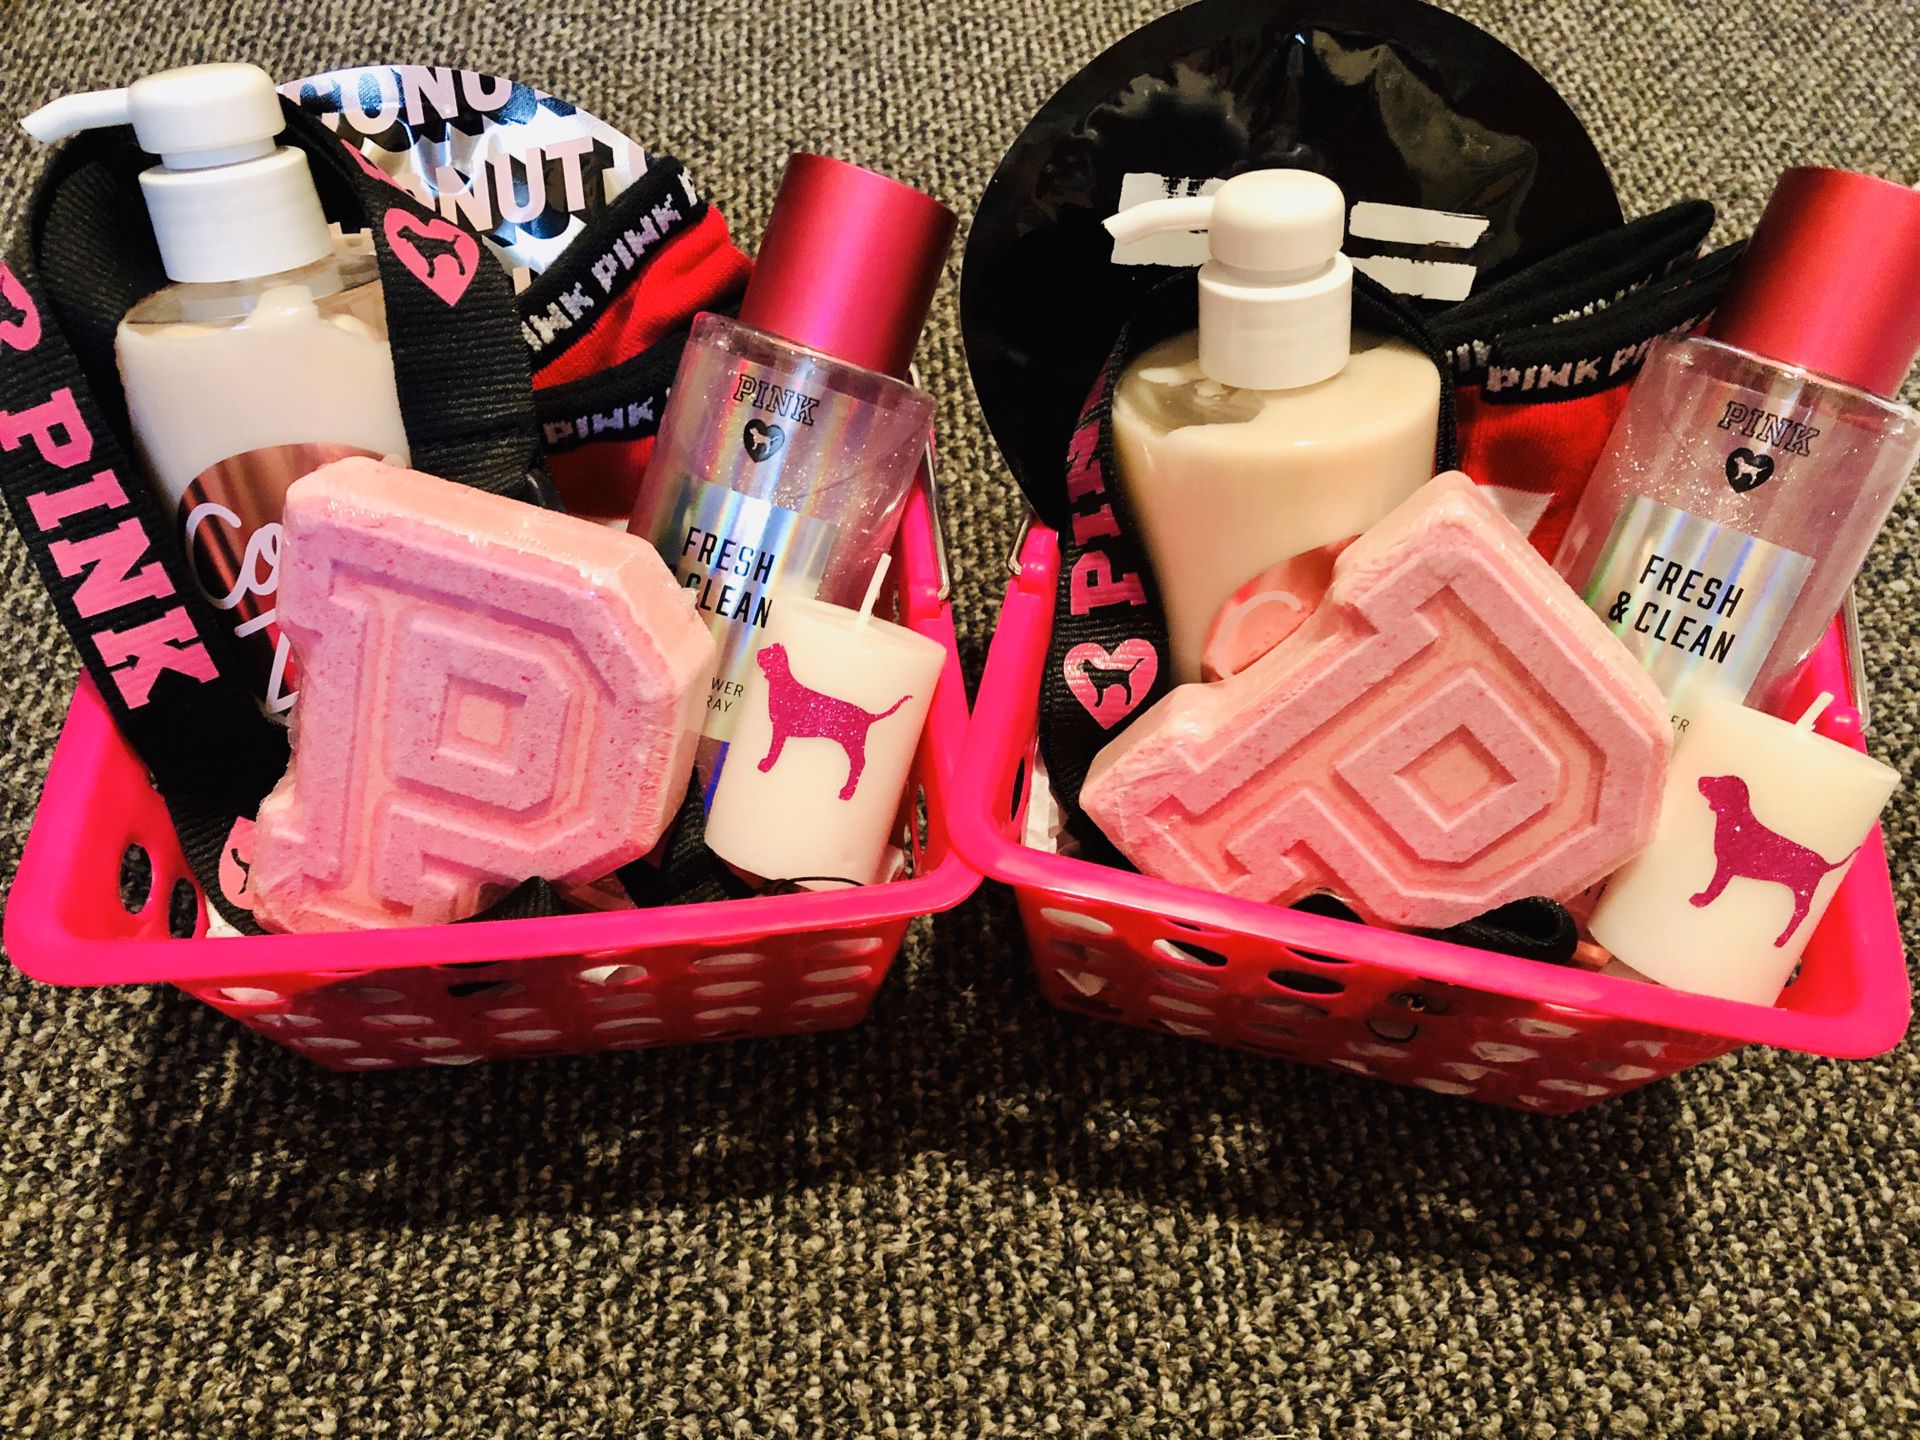 Victoria’s Secret Pink Christmas gift baskets